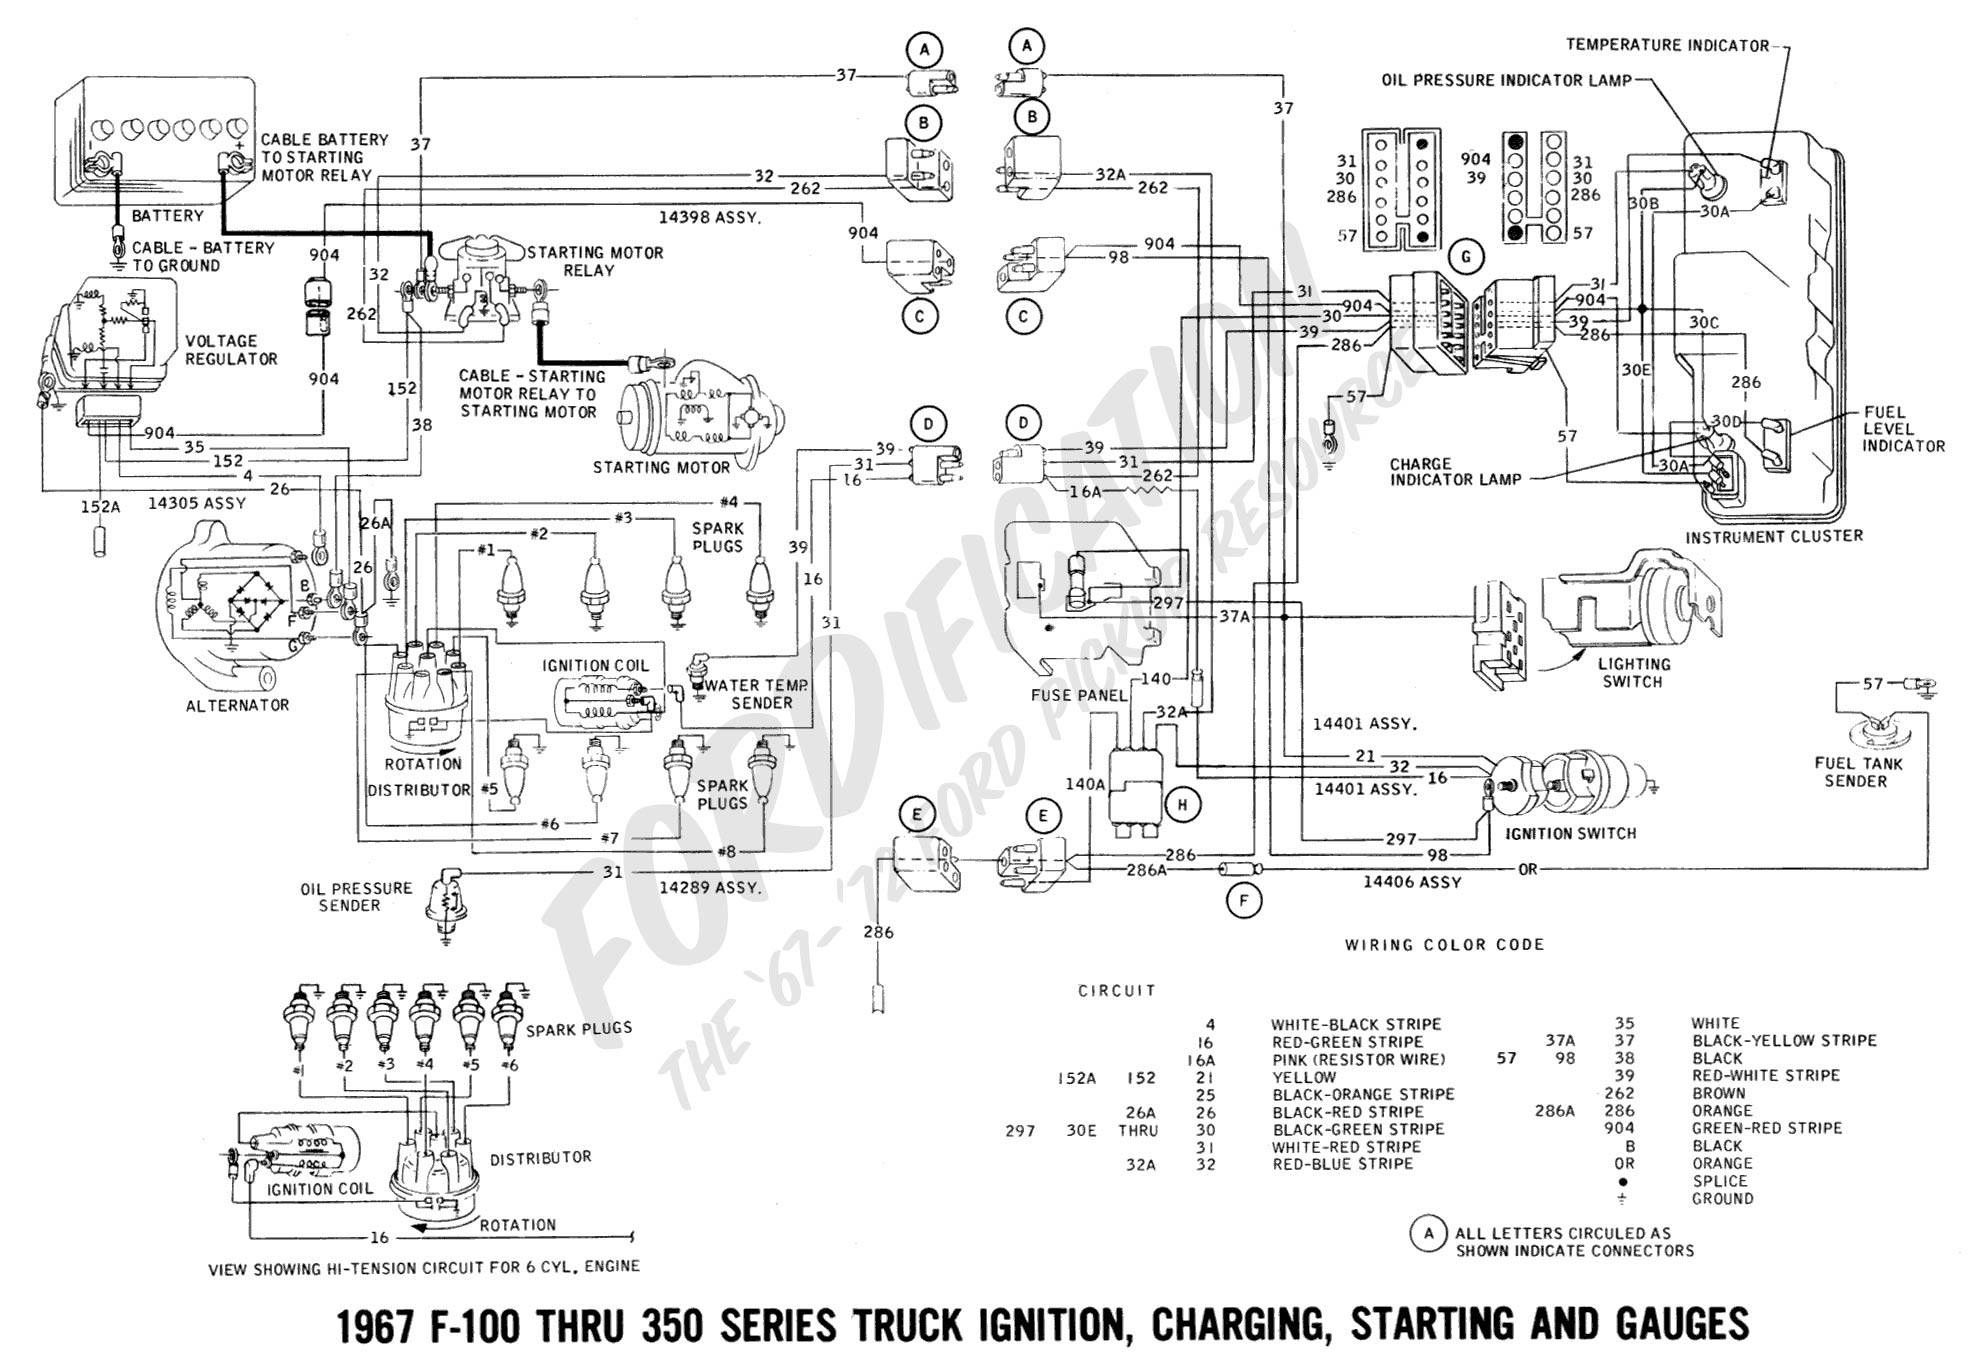 337A4 1998 Dodge Ram Fuse Box | Digital Resources